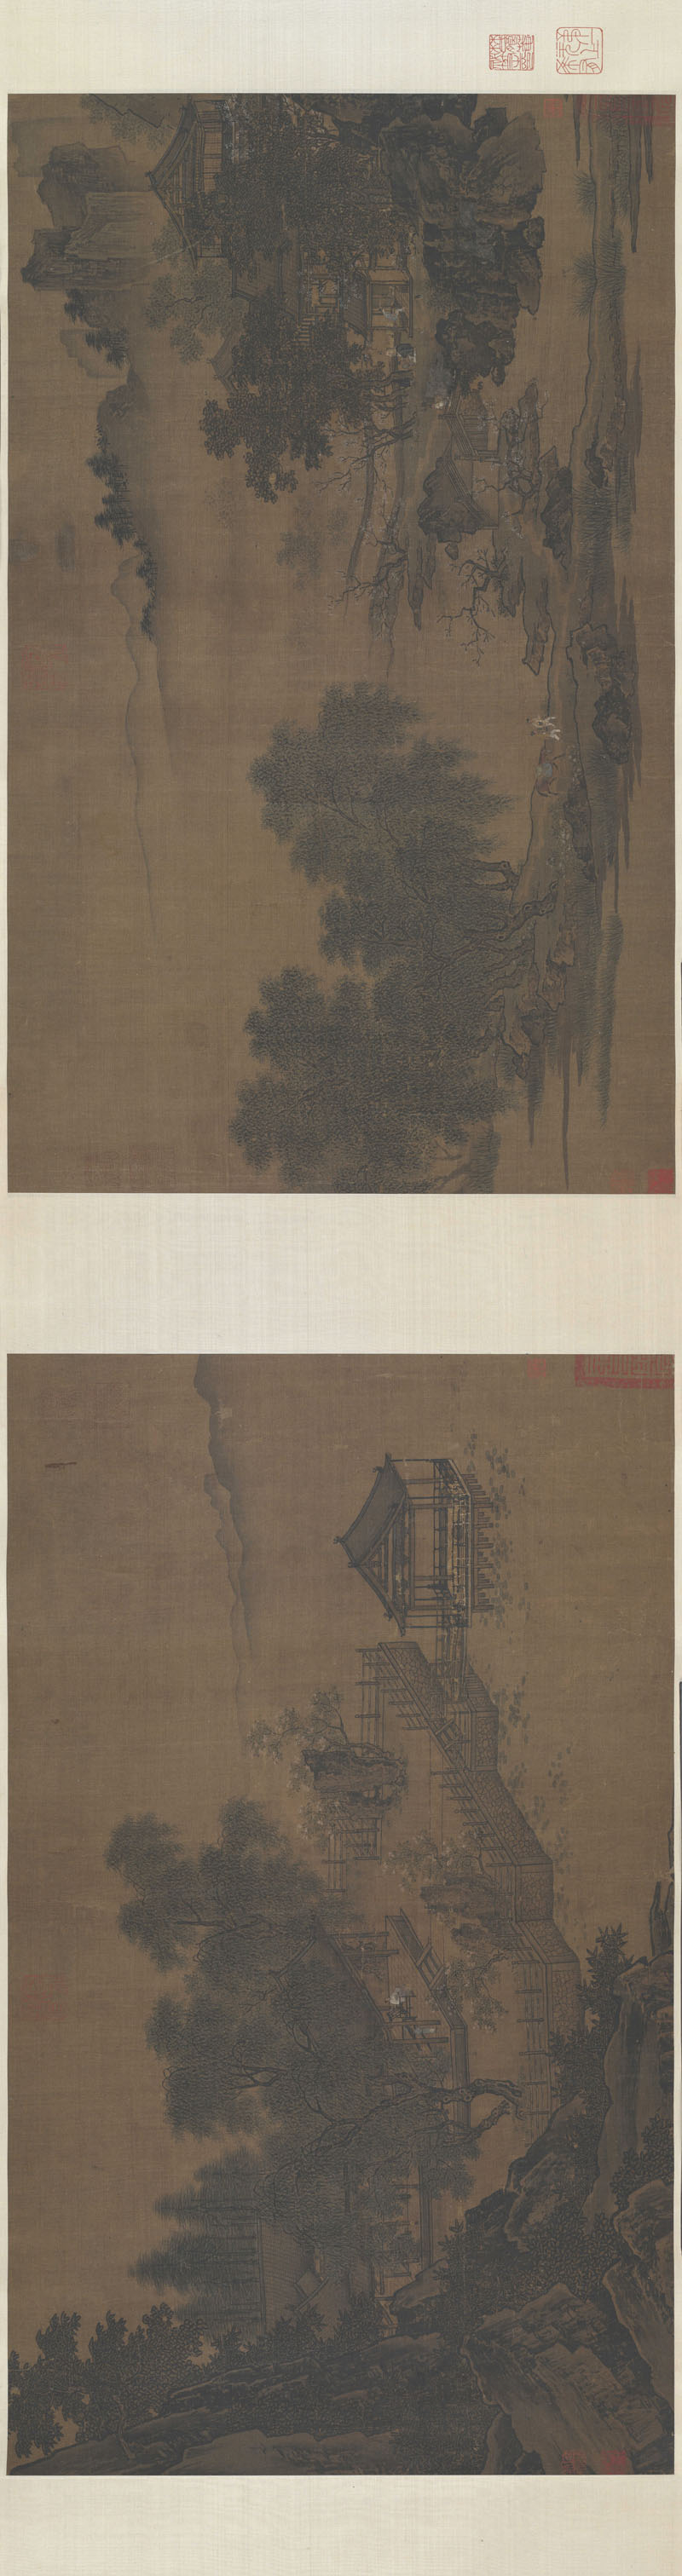 B5039008《四景山水图之三》宋代画家刘松年高清作品 宋代-第1张